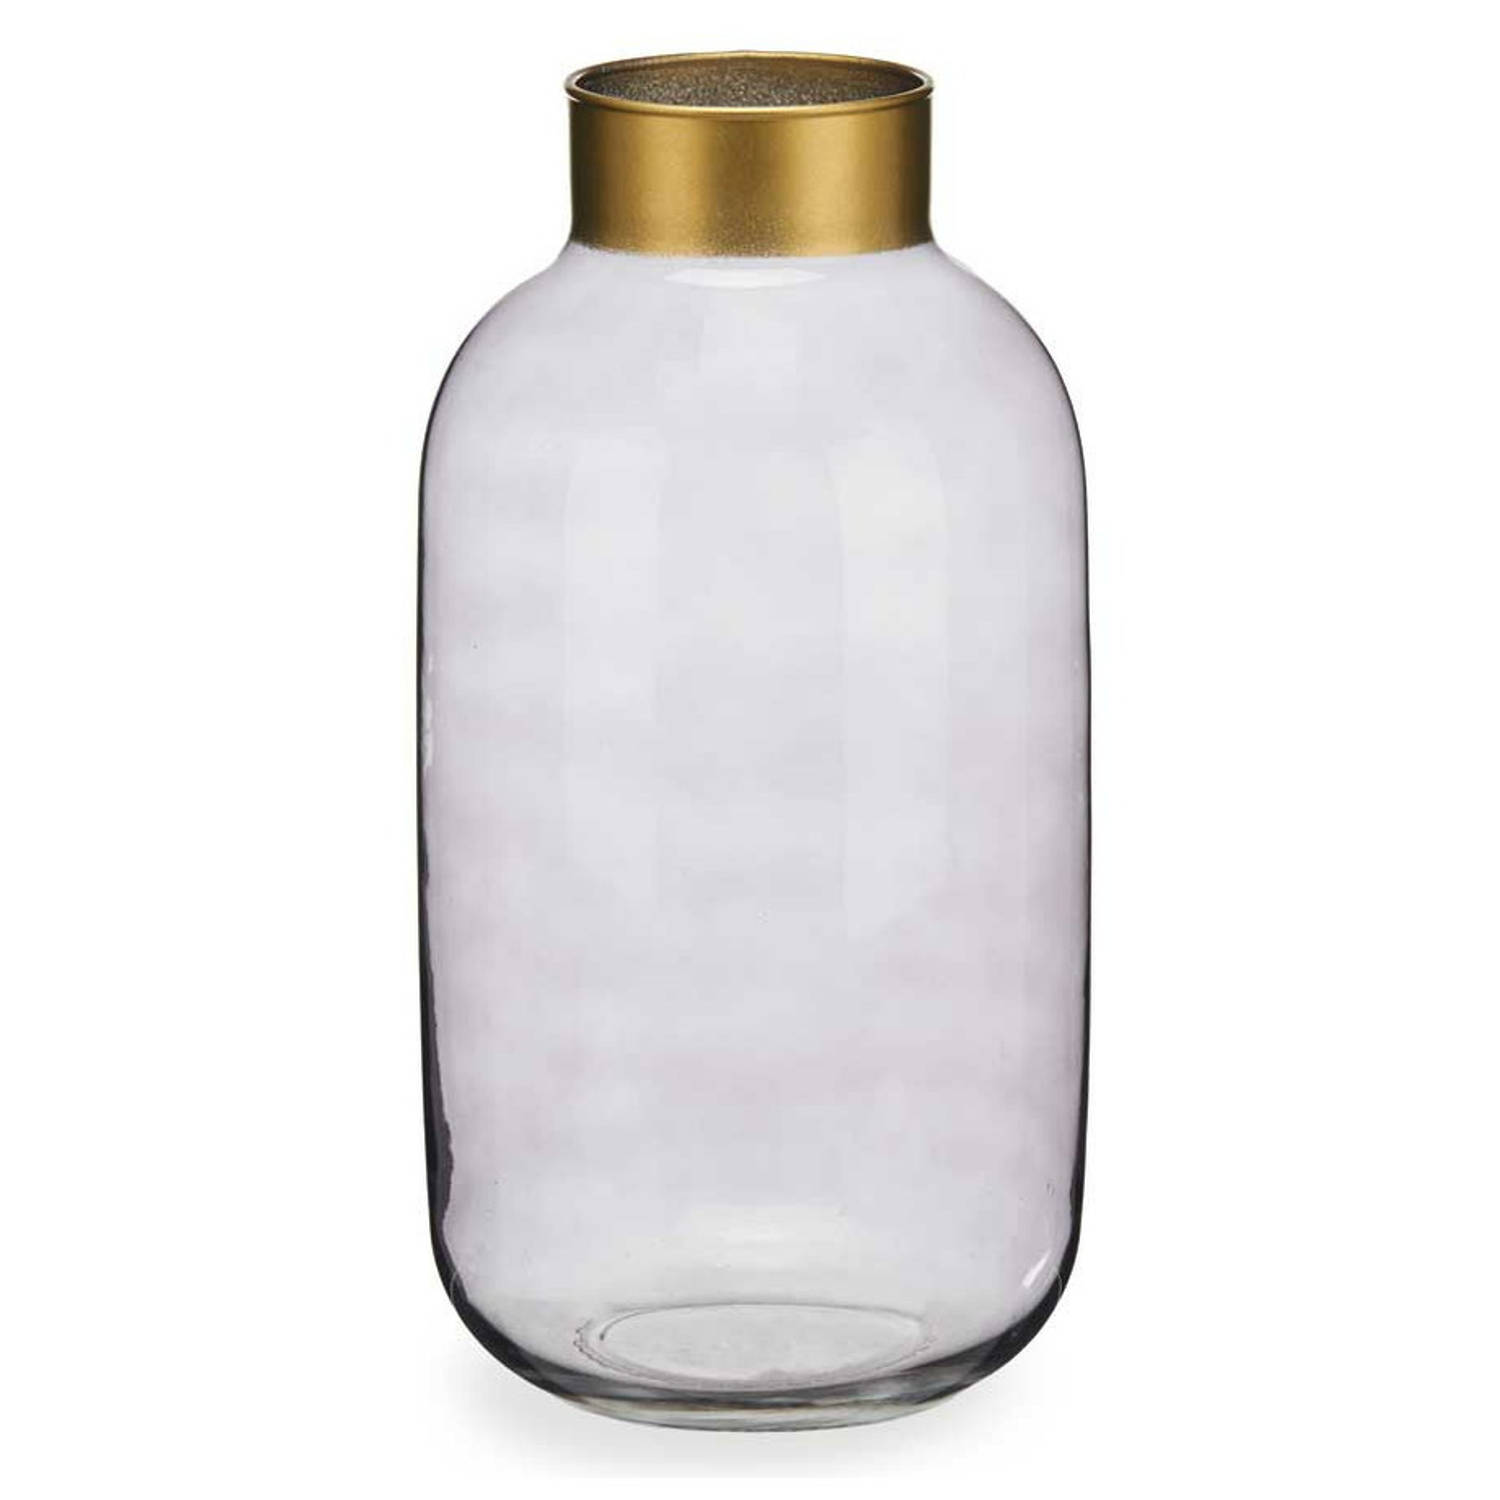 Bloemenvaas luxe decoratie glas grijs transparant-goud 14 x 30 cm Vazen